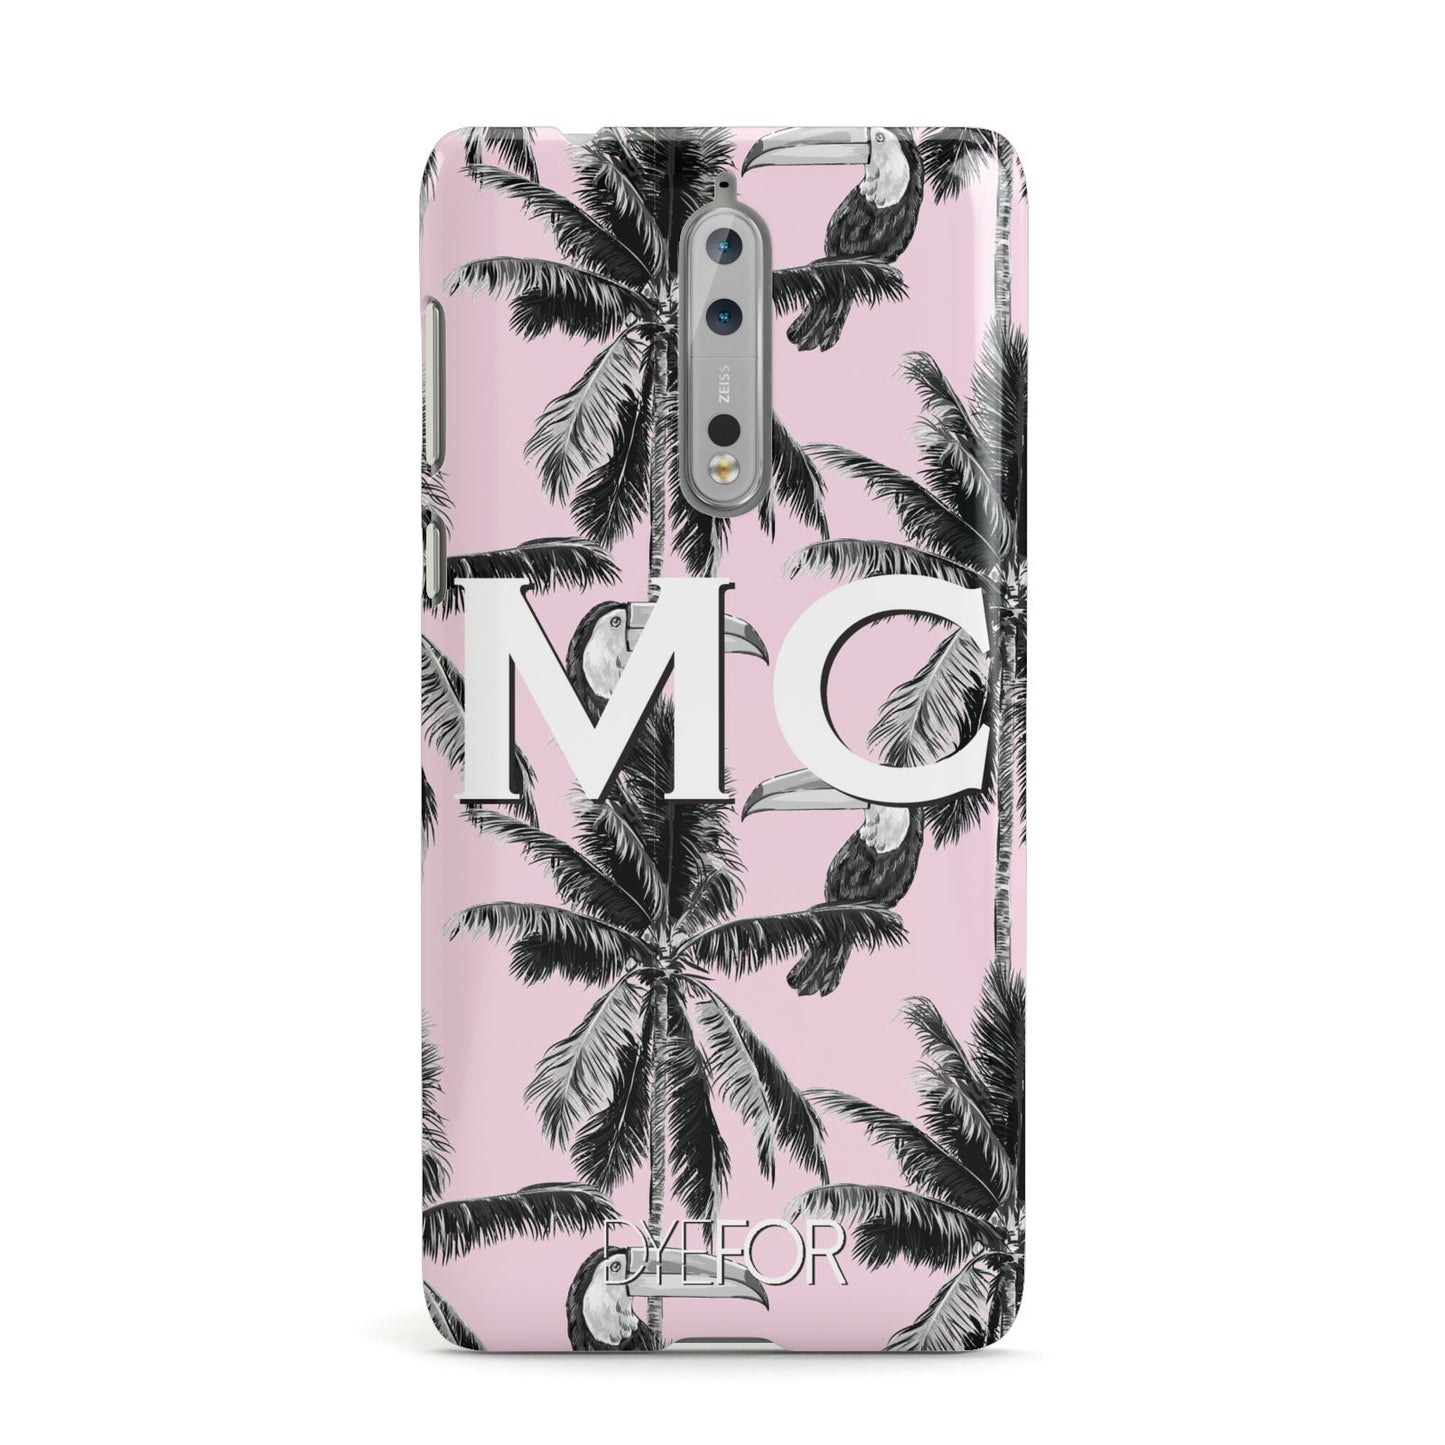 Personalised Monochrome Pink Toucan Nokia Case